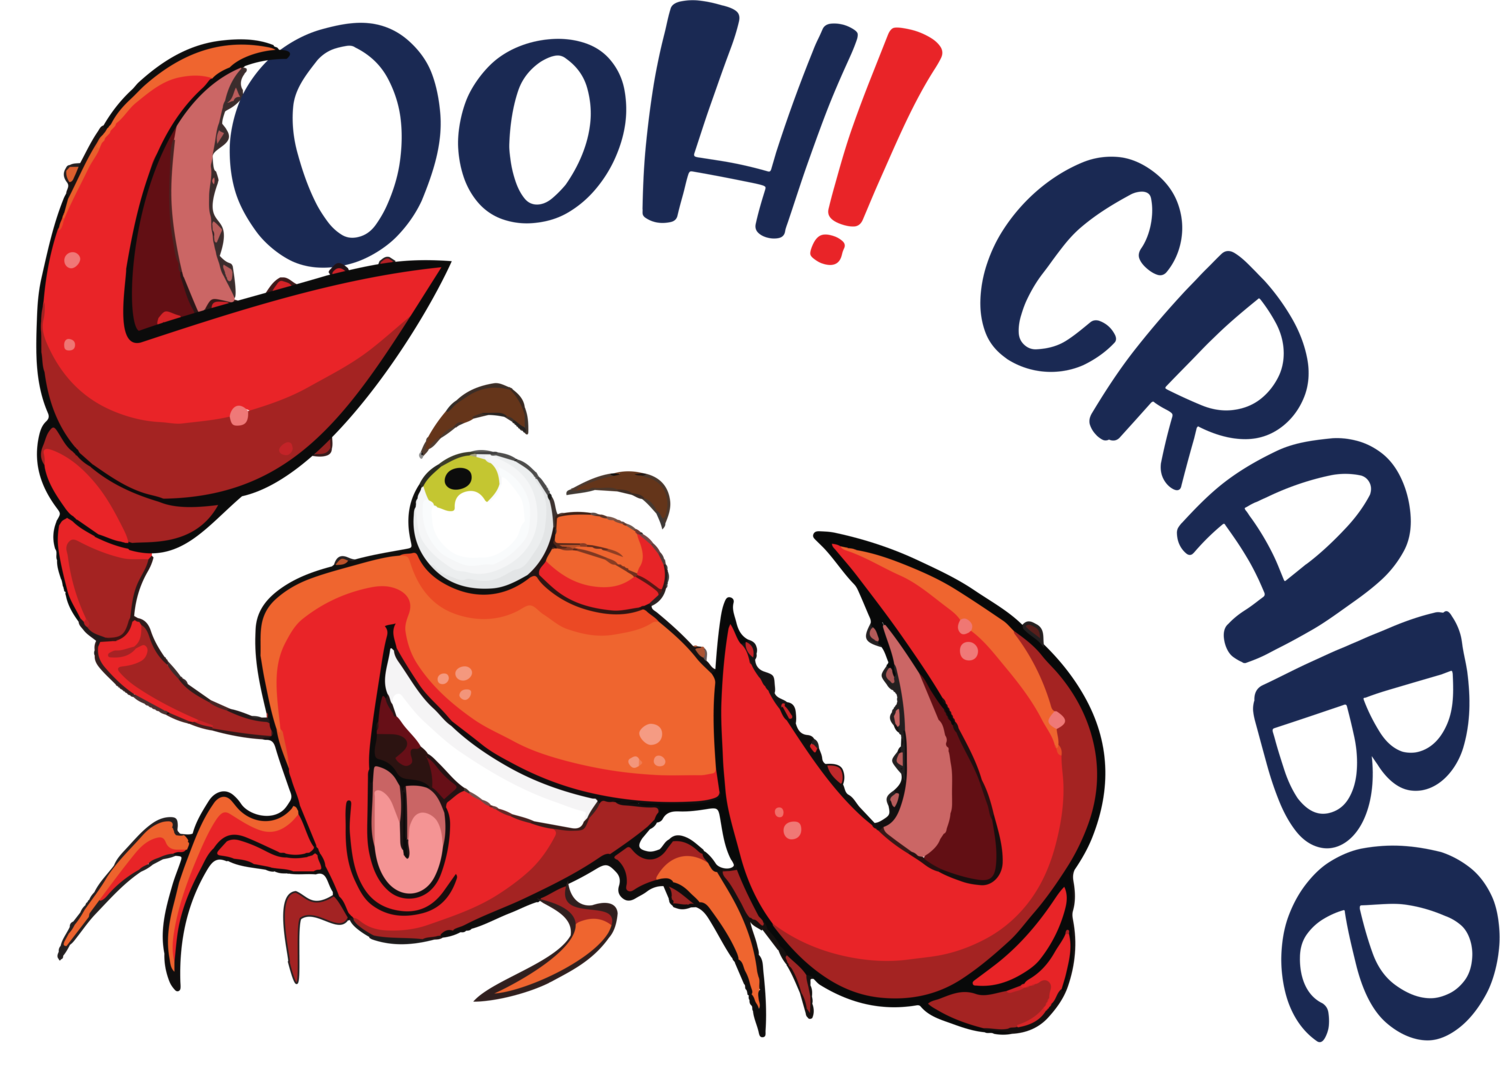 Ooh! Crabe